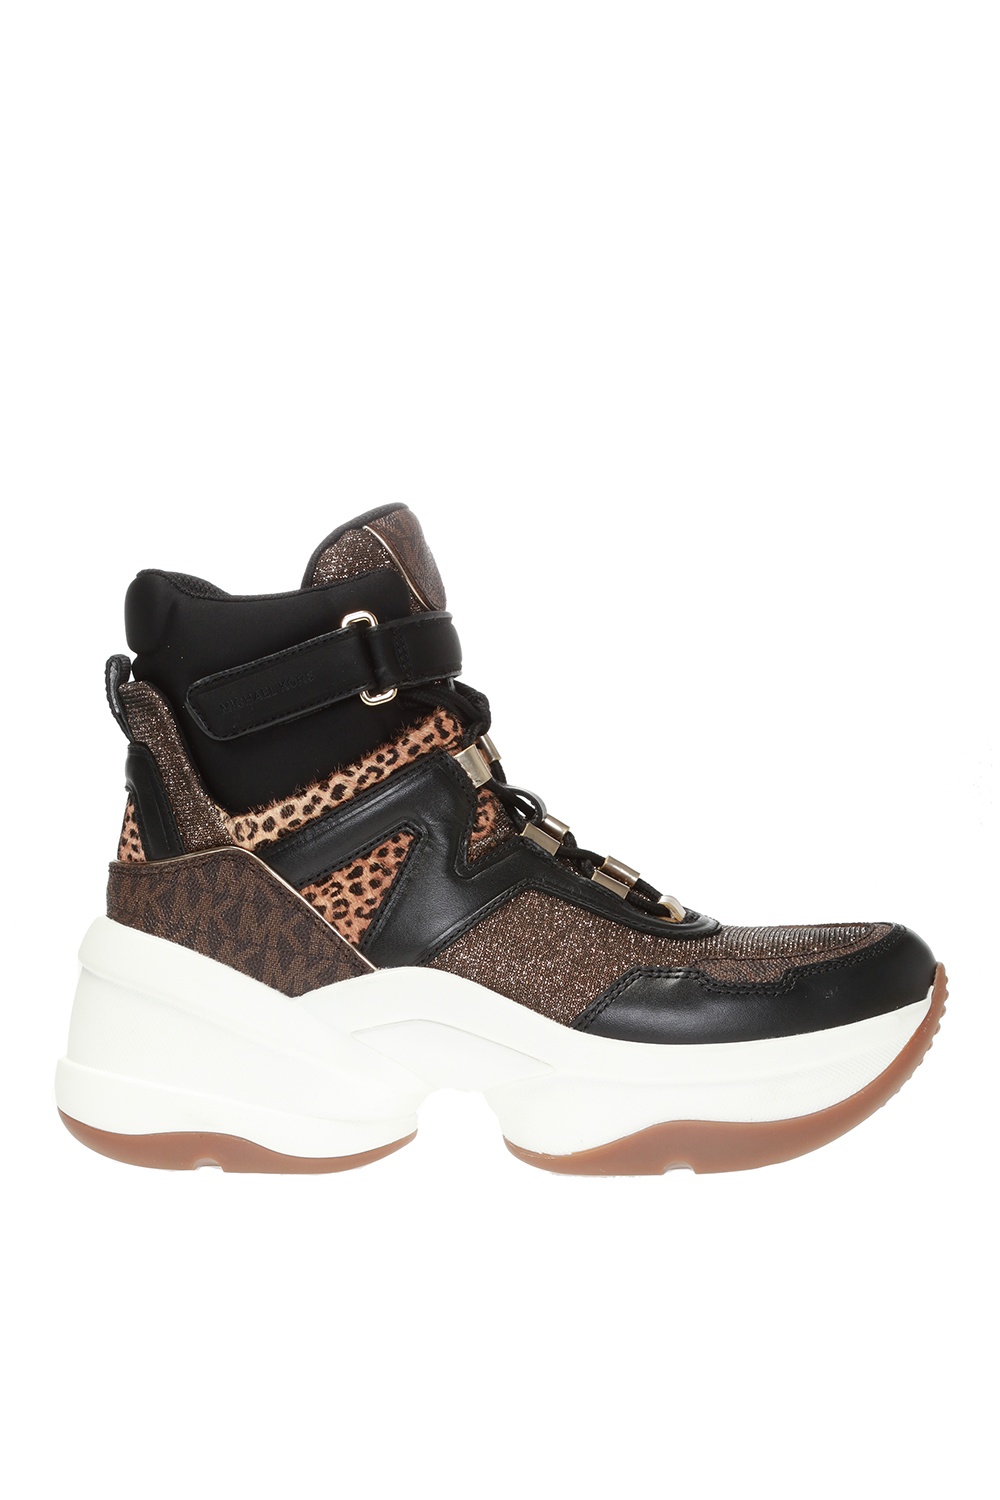 michael kors olympia sneakers leopard